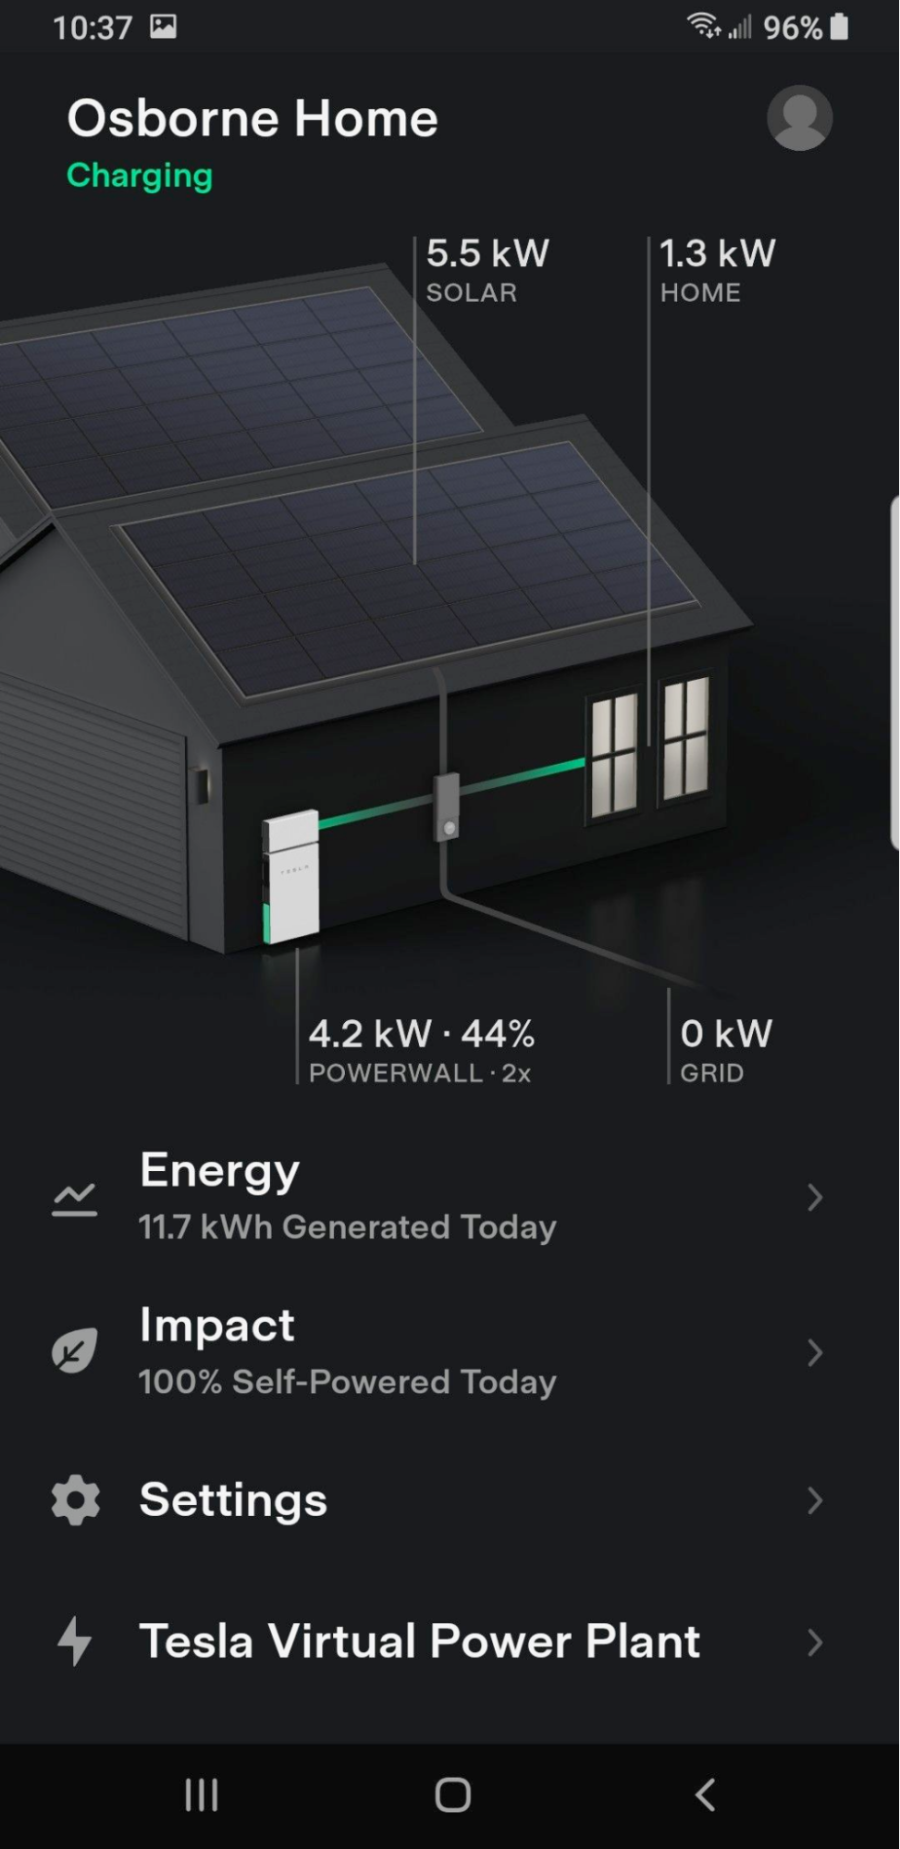 Mobile view of Osborne Home solar array metrics.